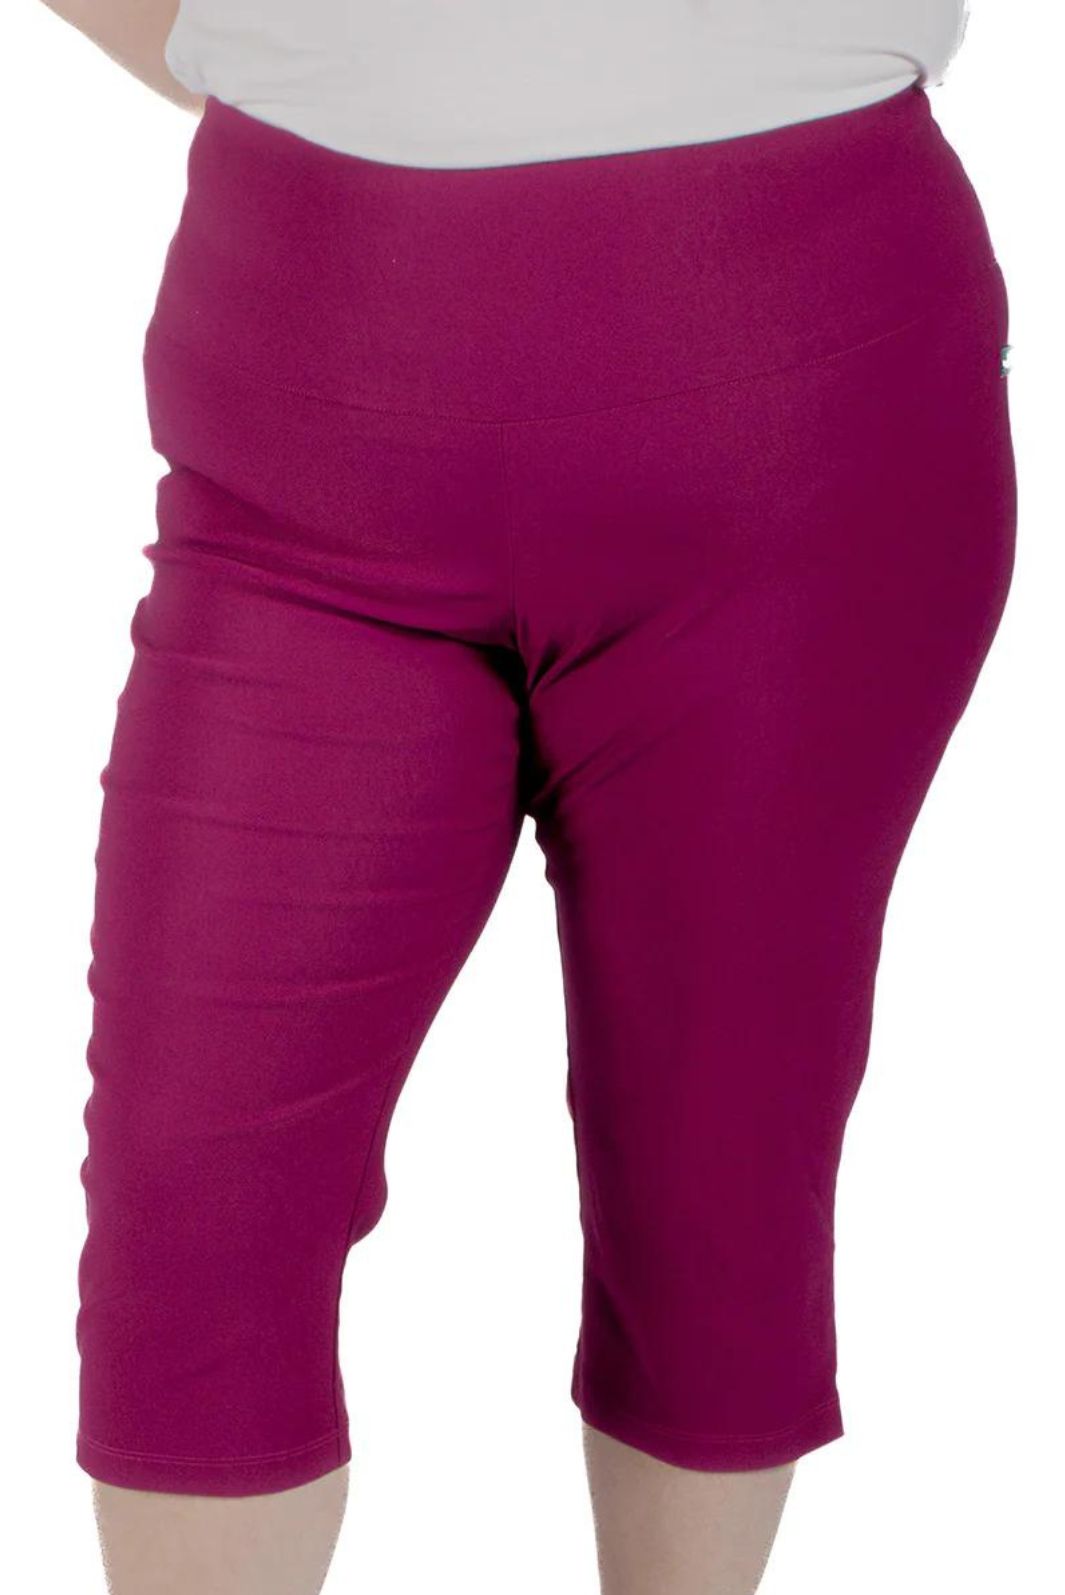 Terra & Sky Womens Plus Size Capri Pants 0X Pink Pull-On Wide-Leg Stylish  Casual | eBay